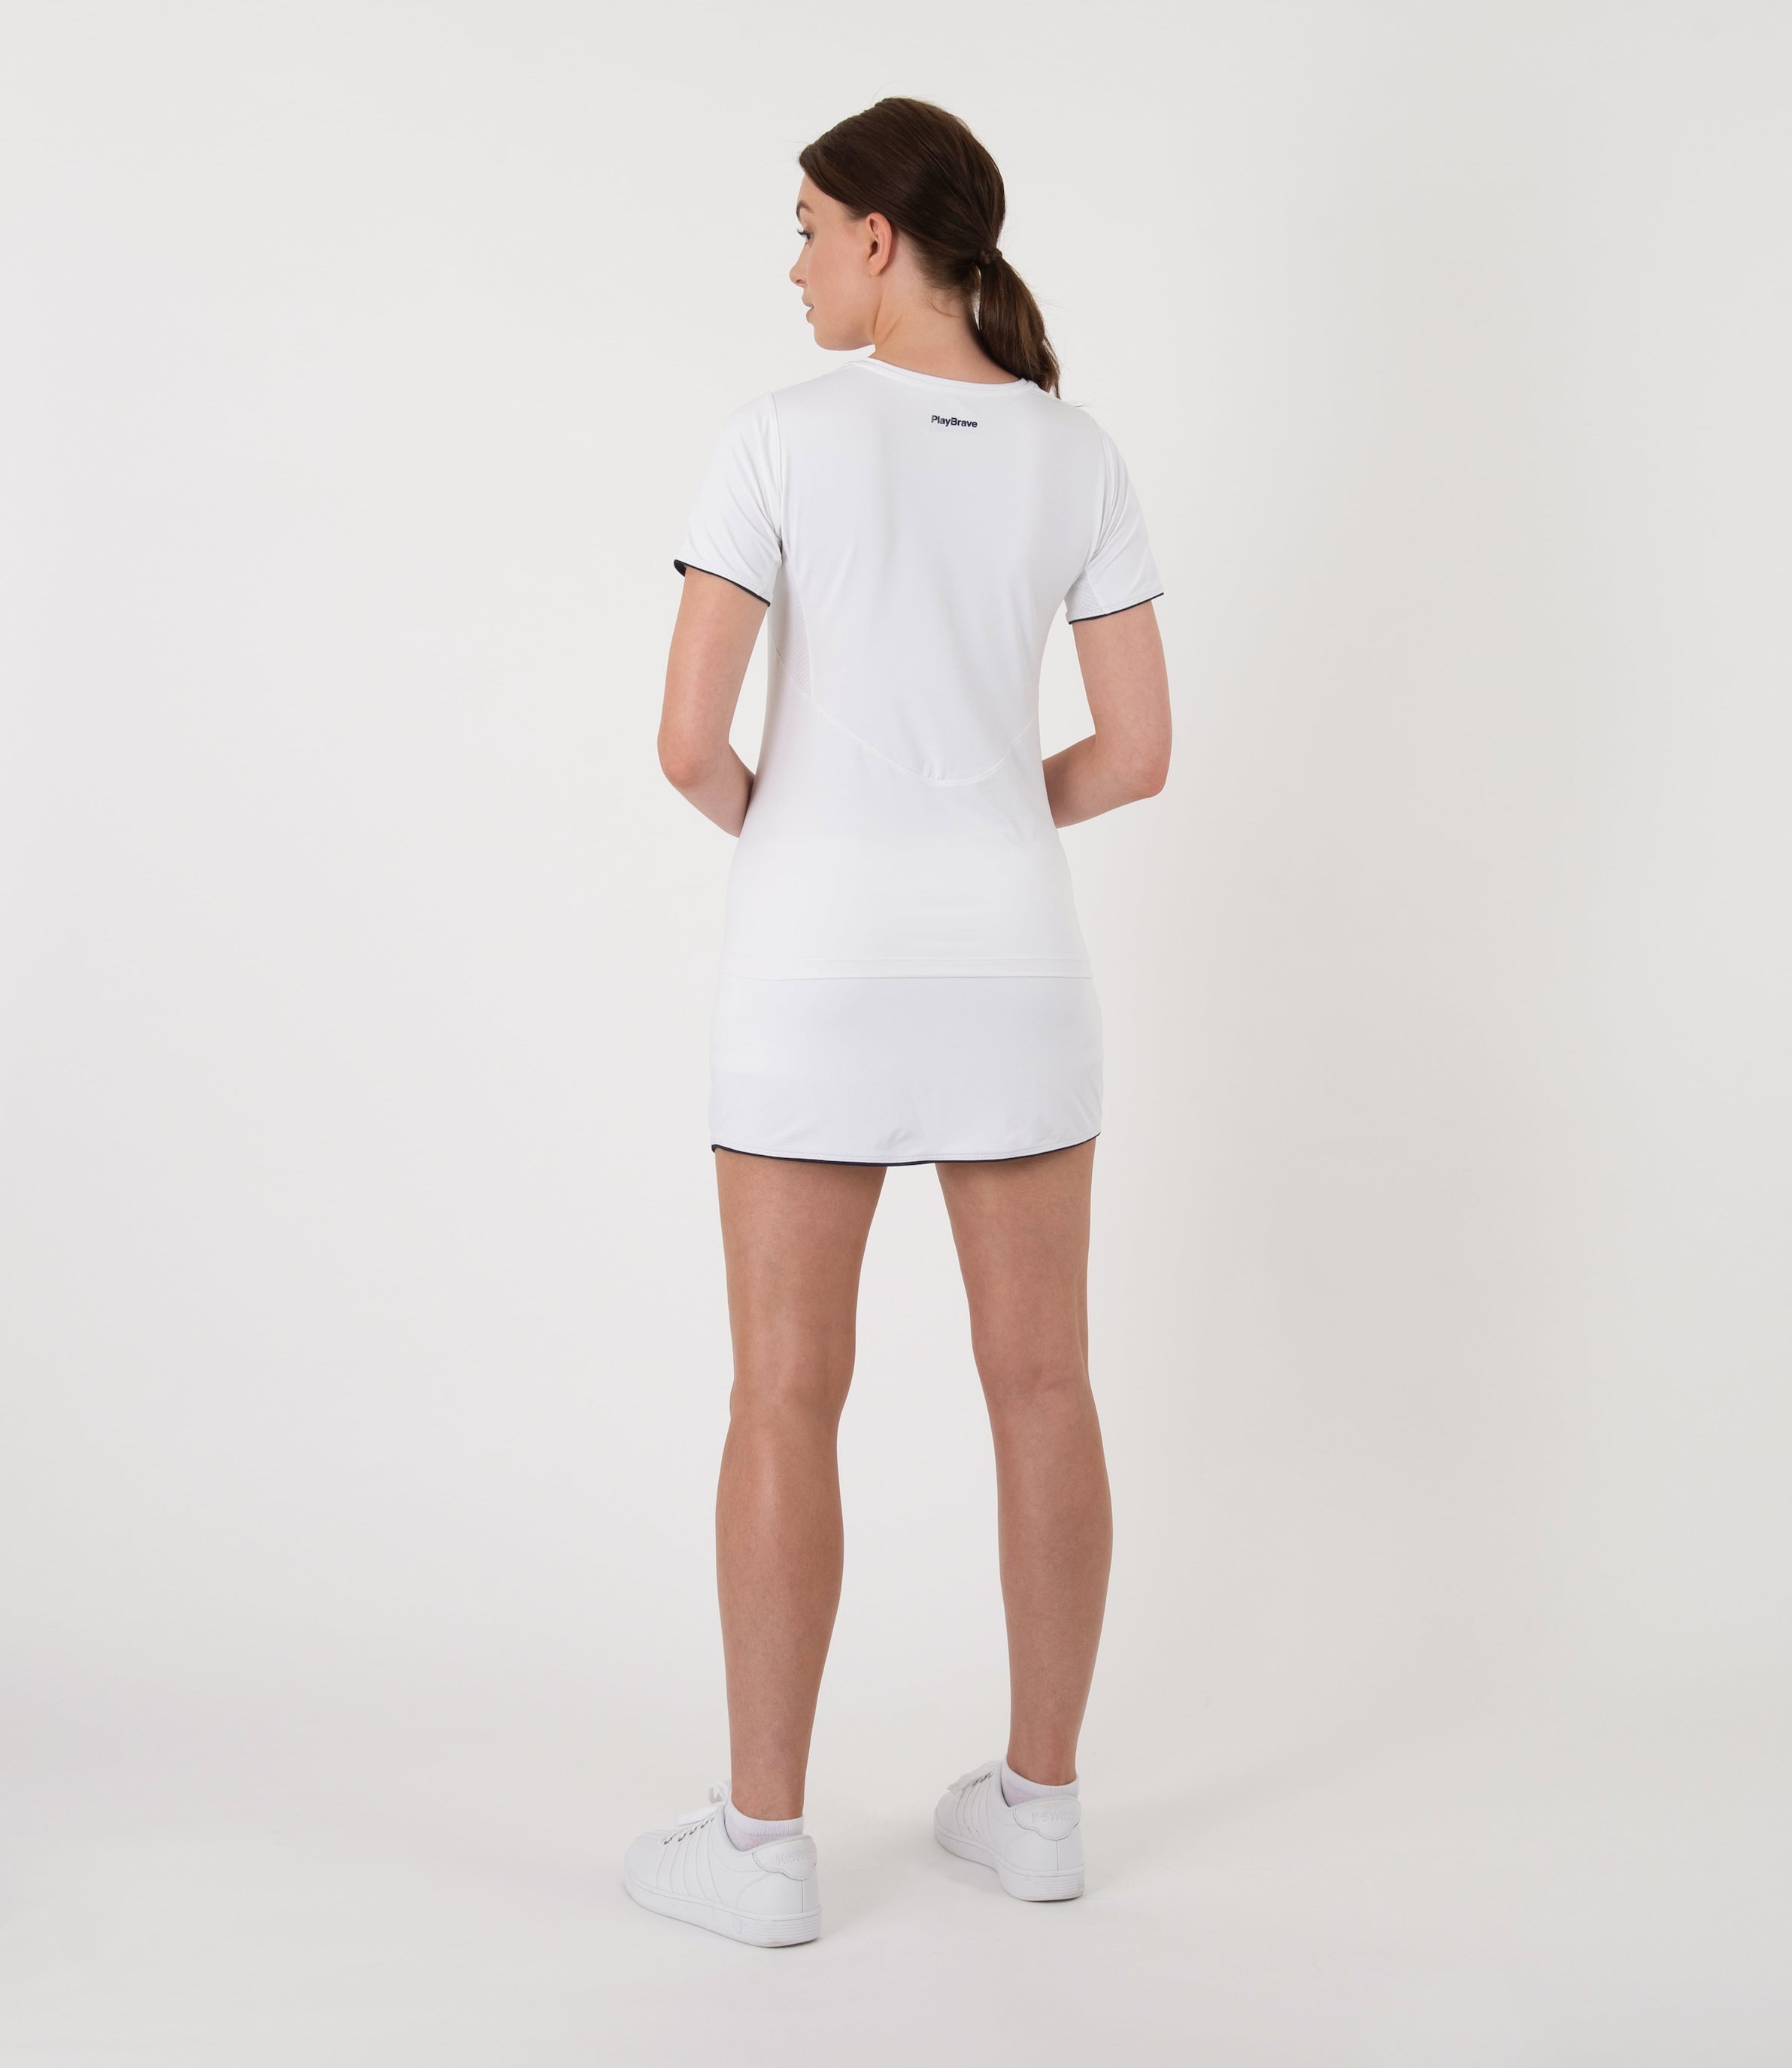 Catherine Technical Fitness Tee - White | PlayBrave Sportswear